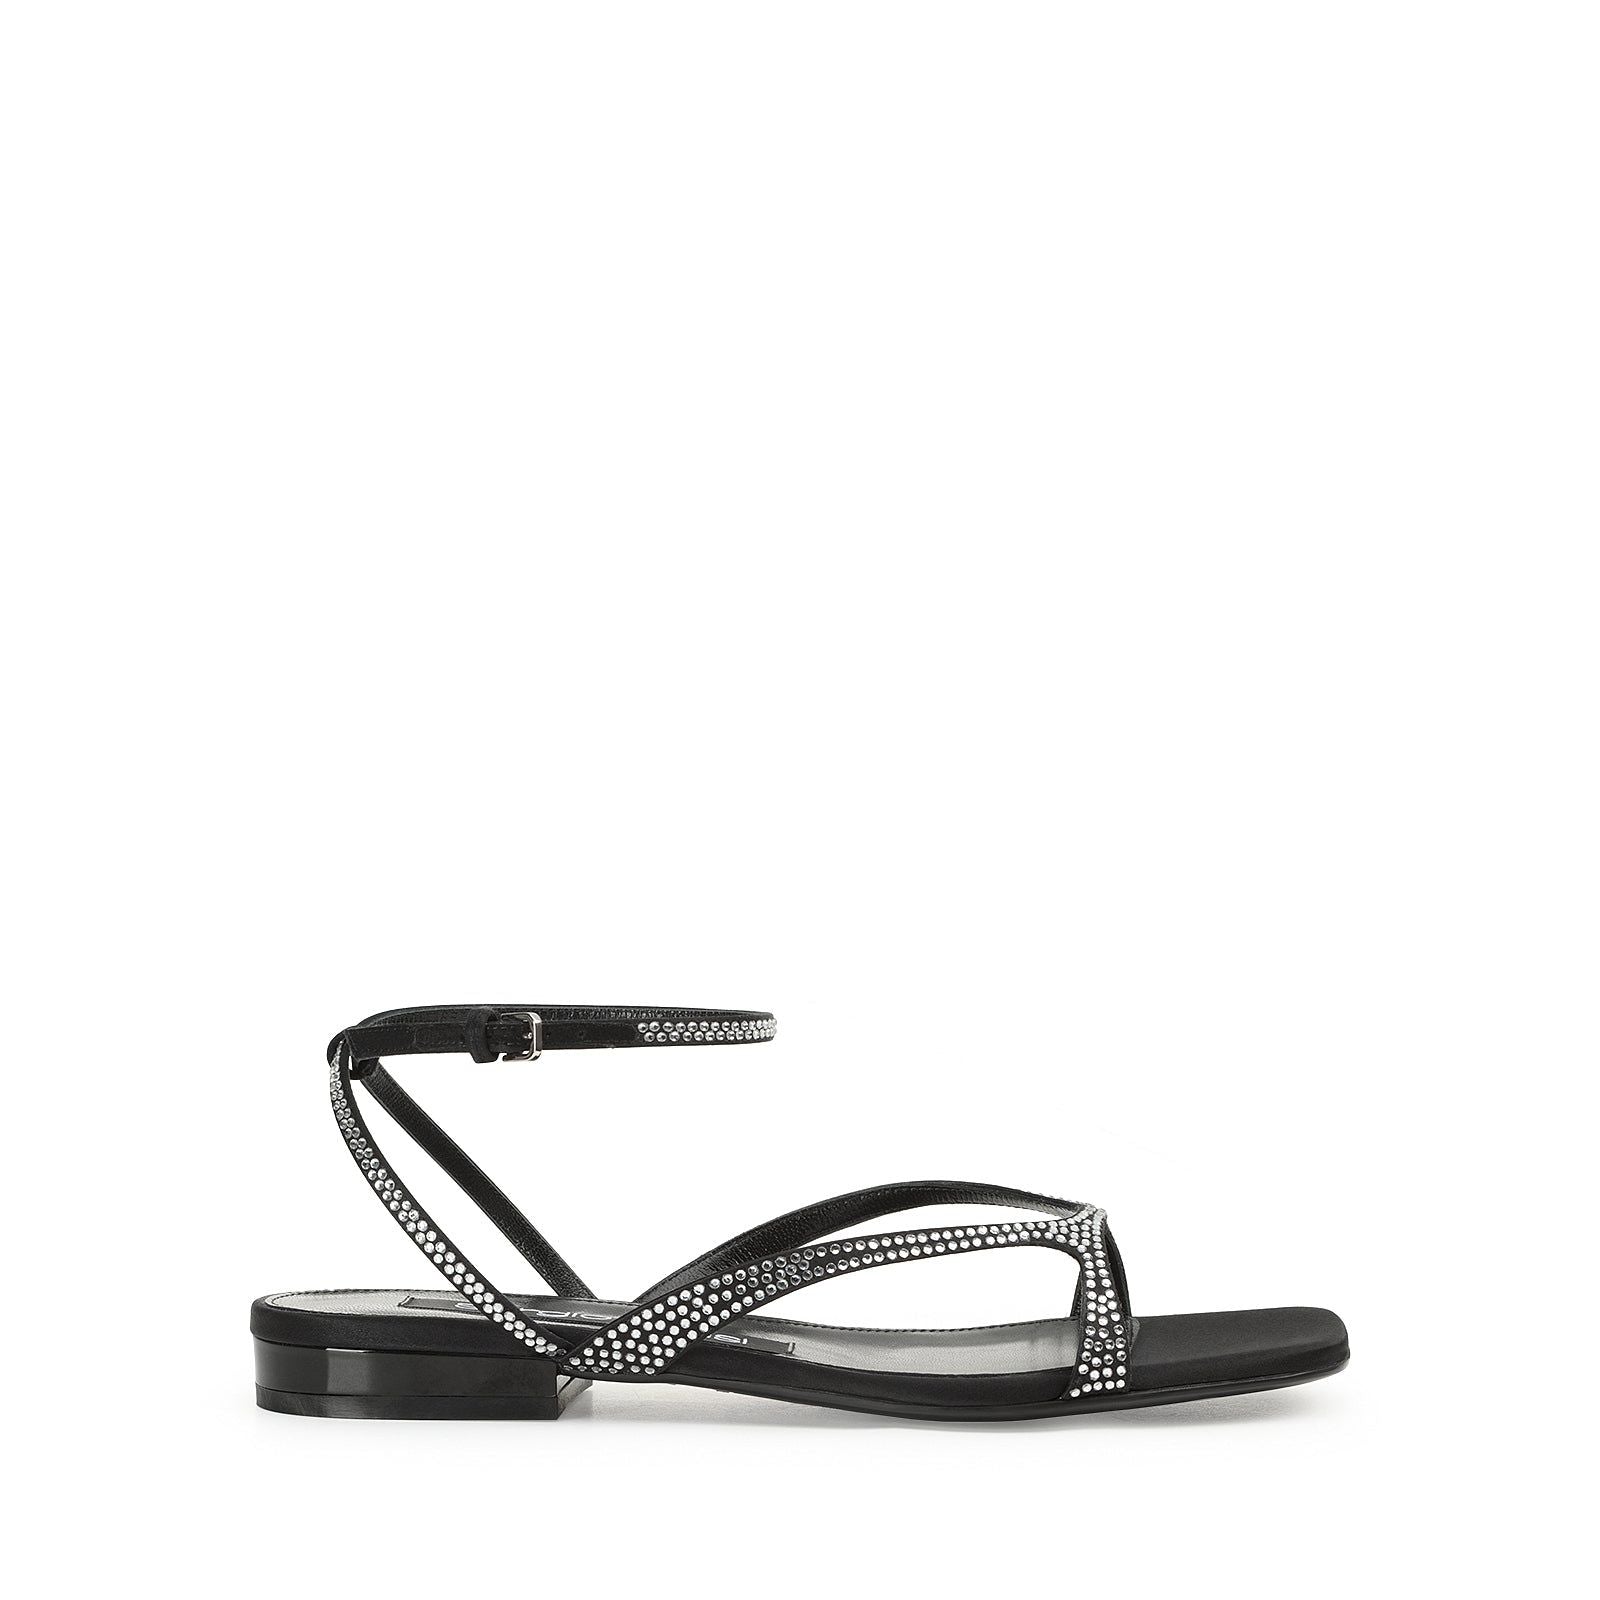 Sr Aracne flat sandals - Nero & Crystal